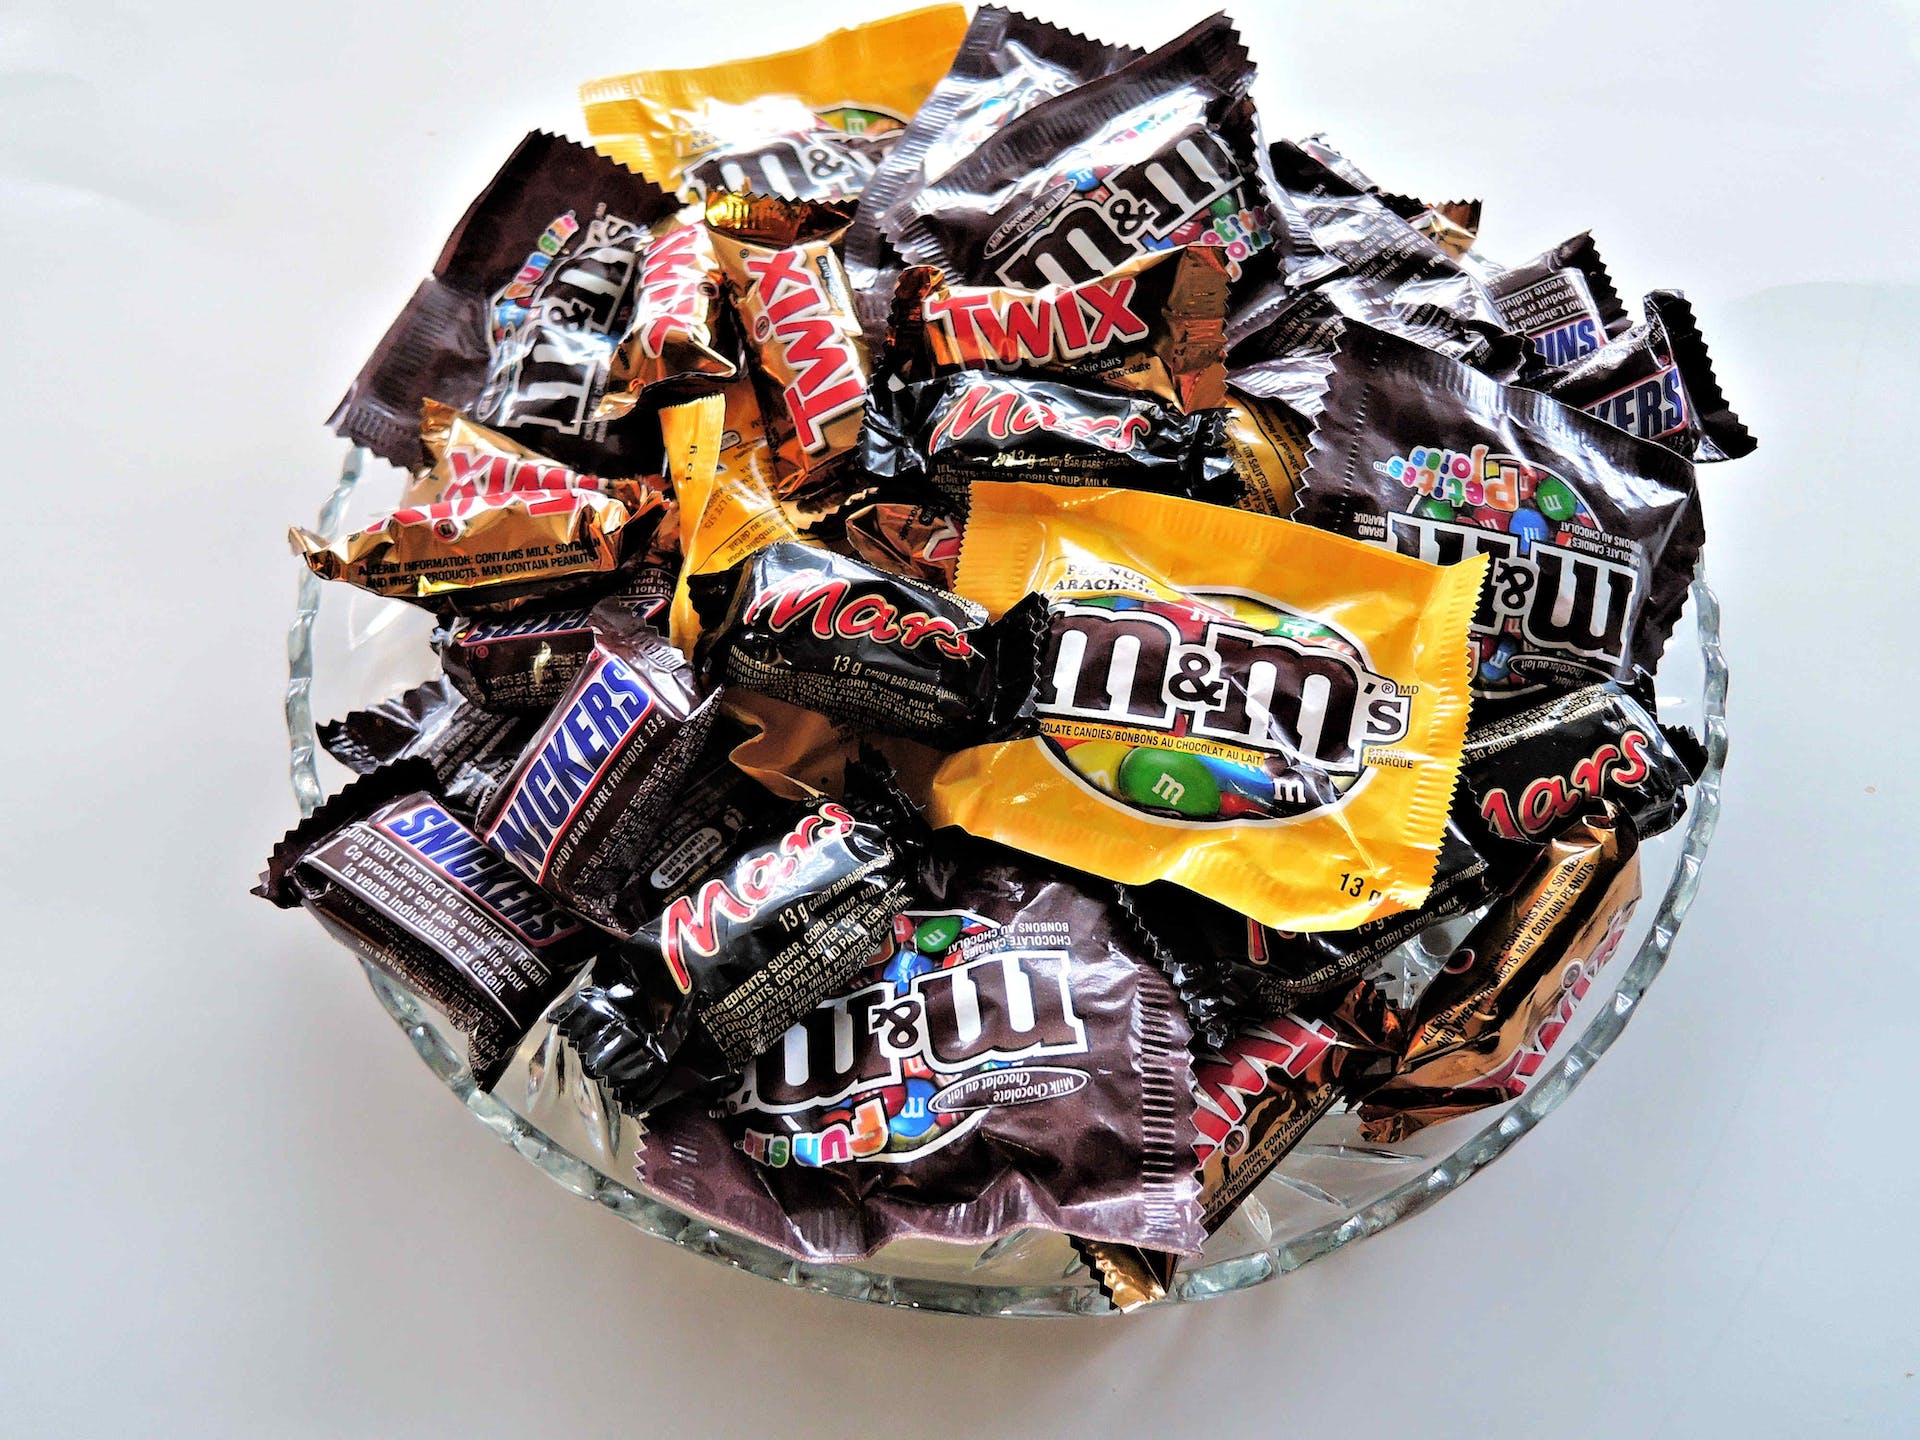 Glasschale voller Schokolade | Quelle: Pexels